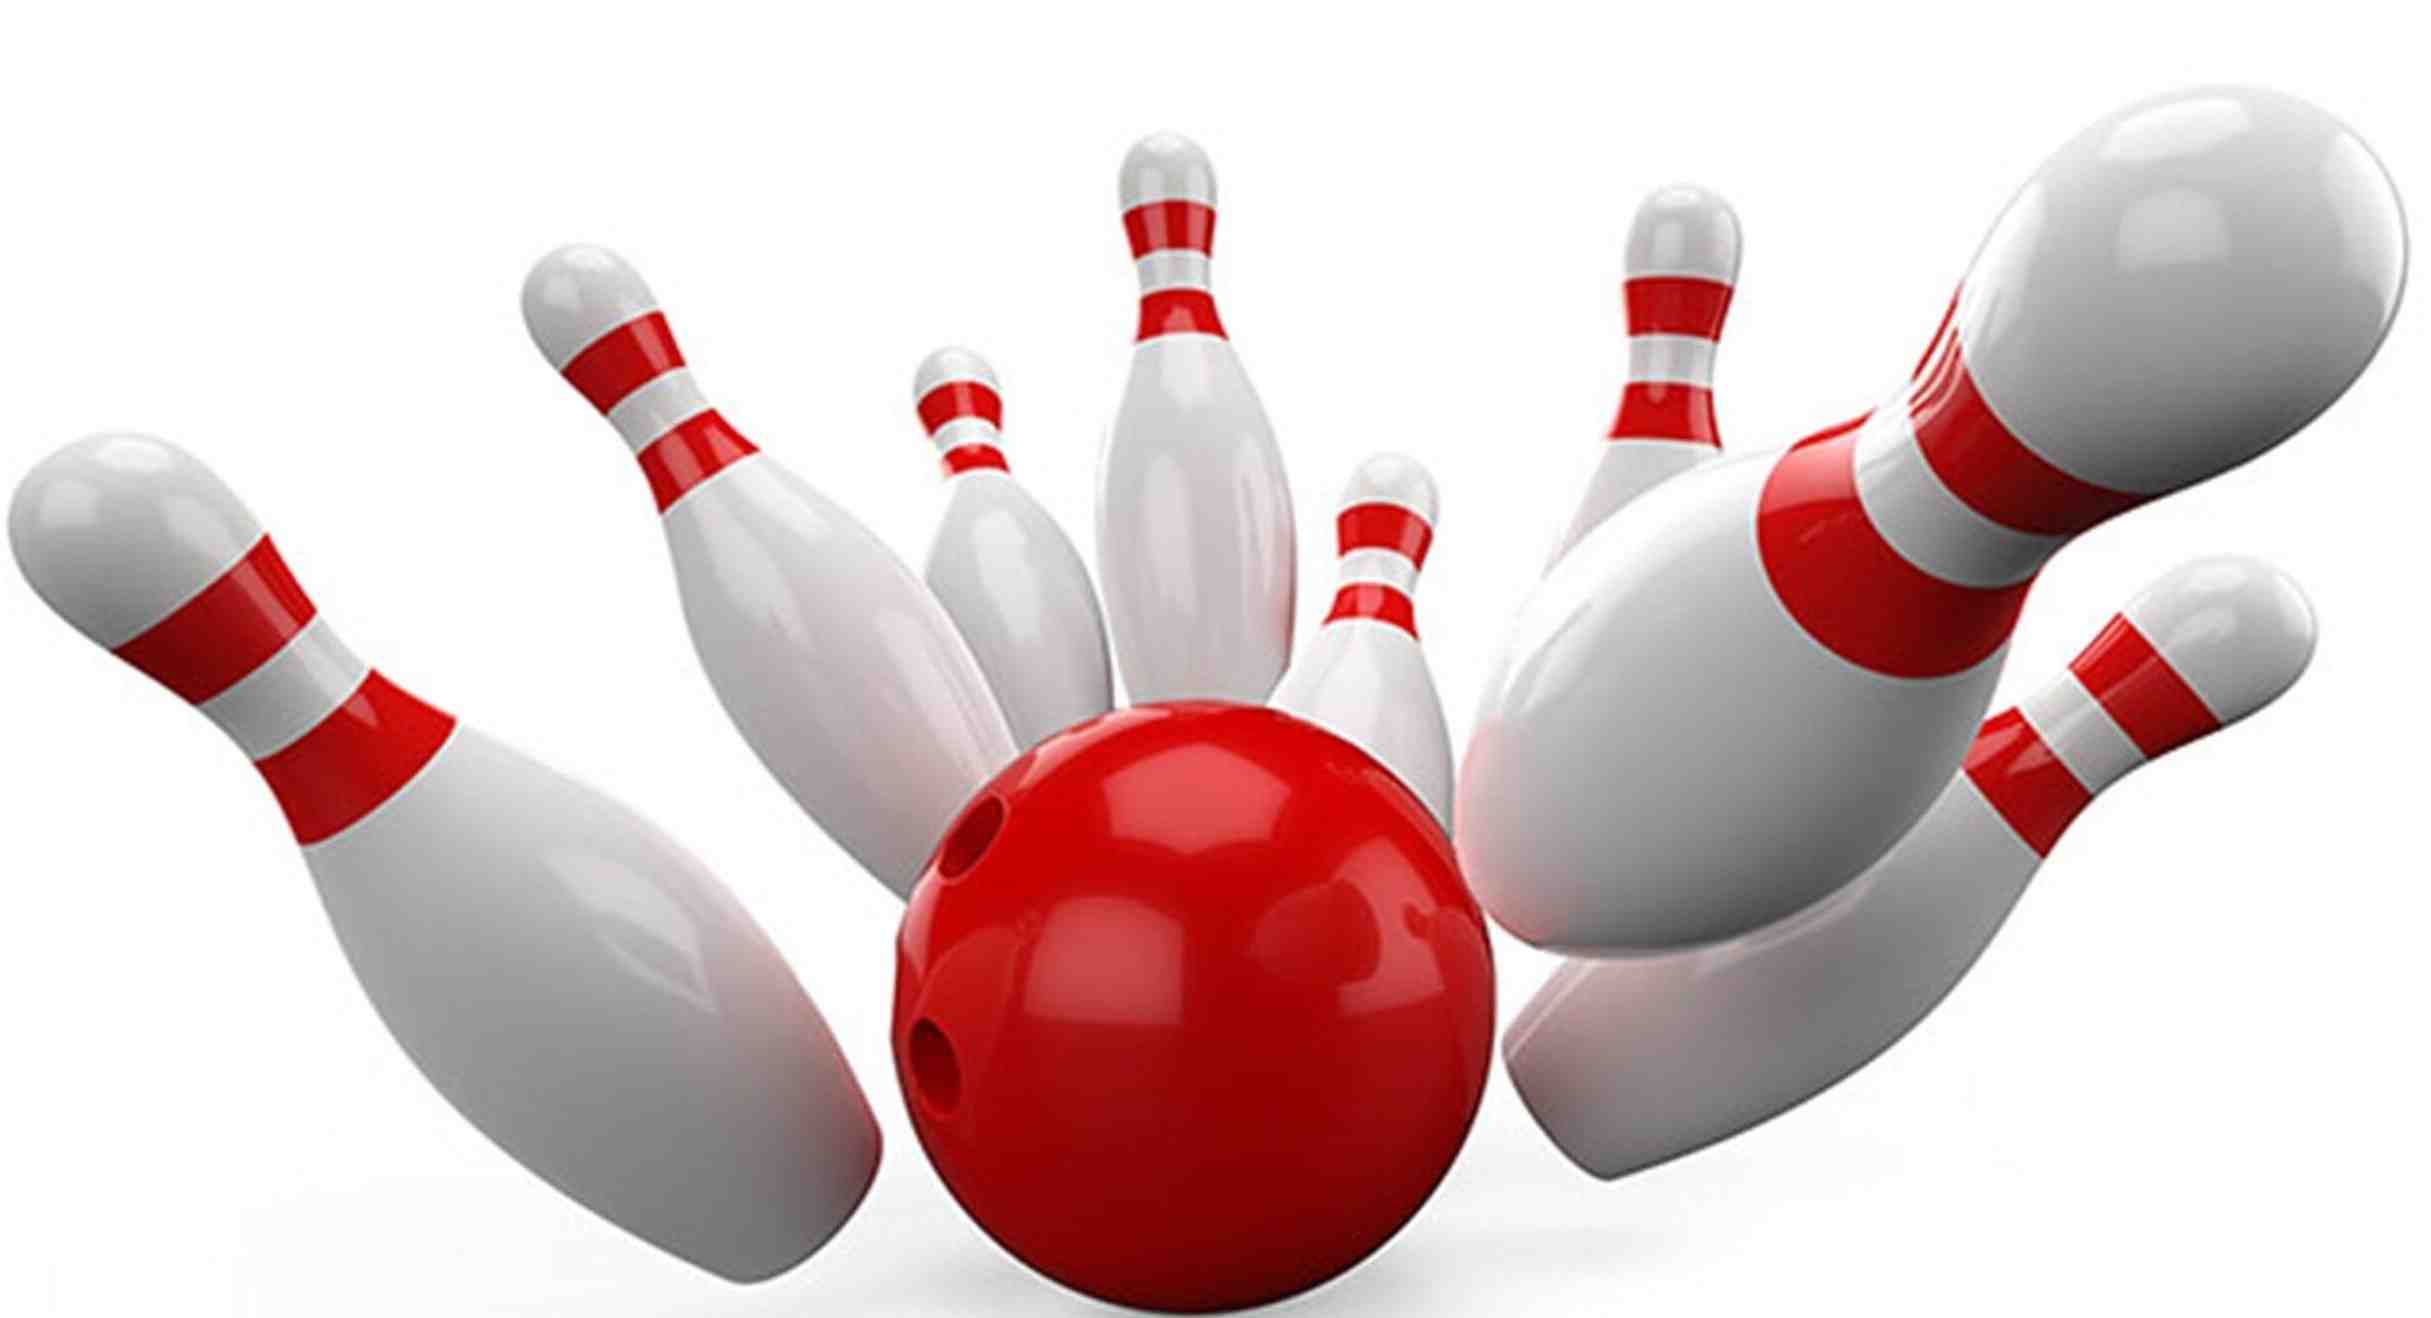 Pakistan Open Tenpin Bowling Championship starts on November 7